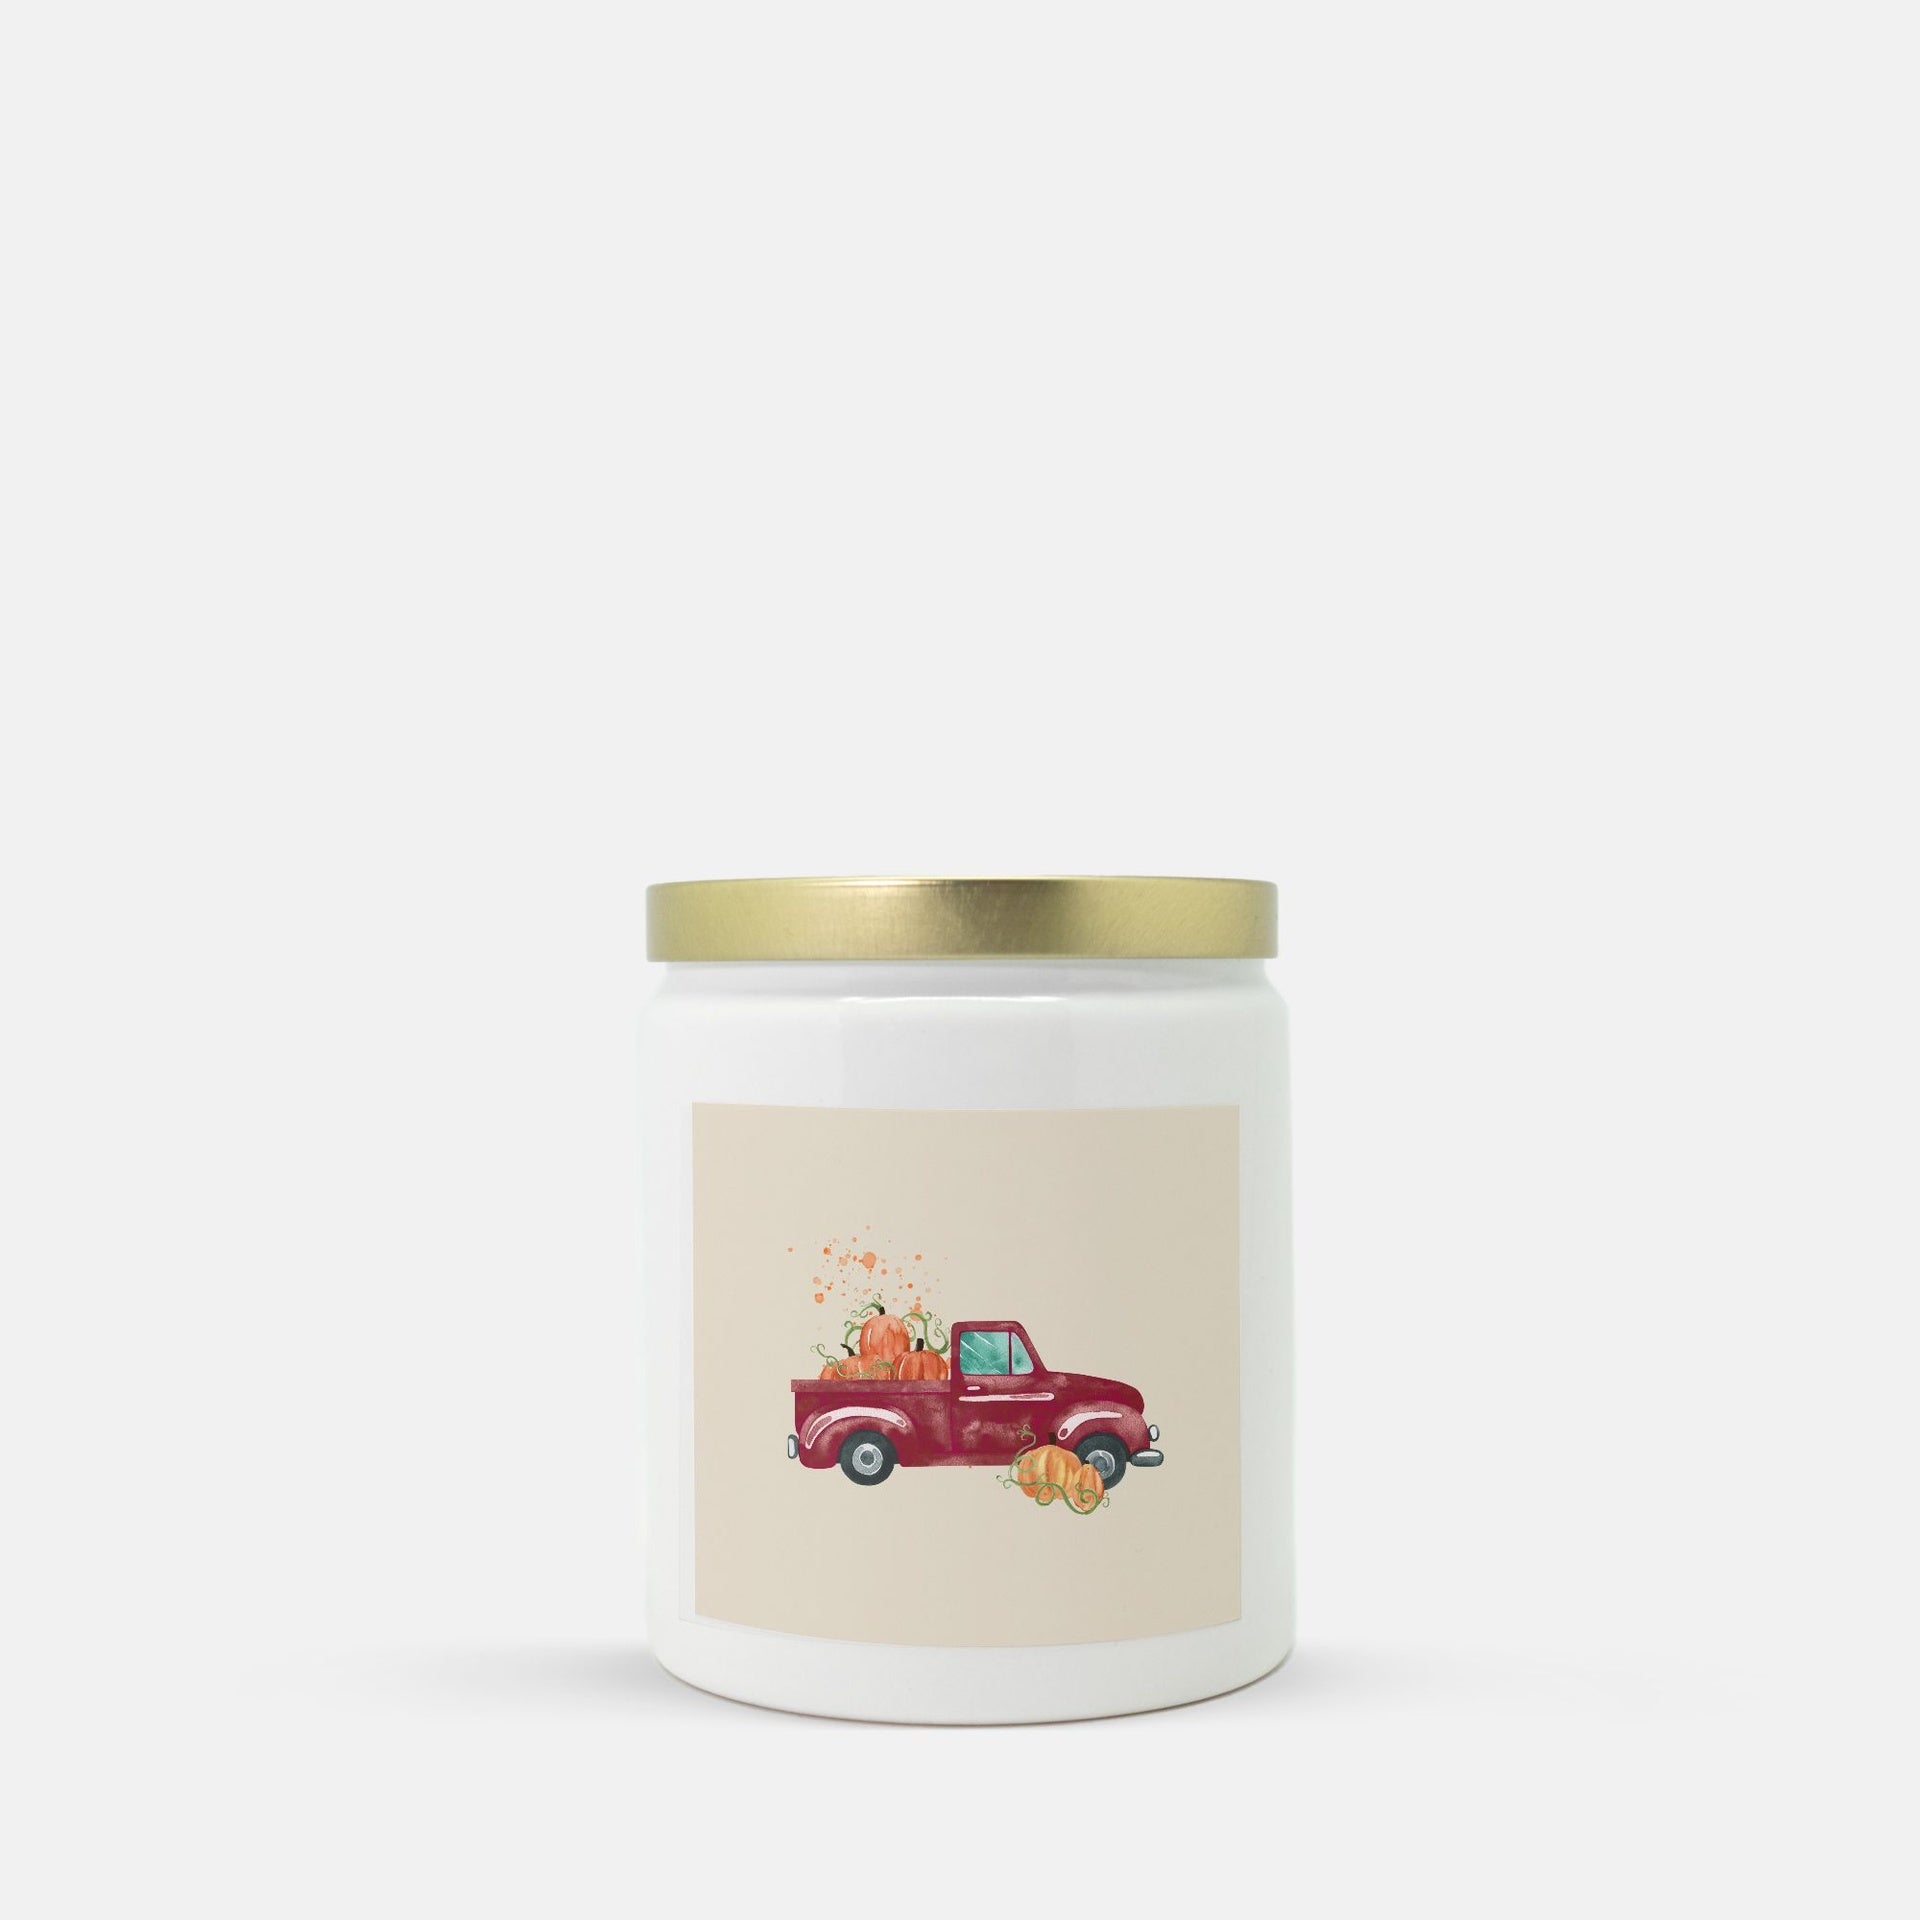 Lifestyle Details - Burgundy Rustic Truck Ceramic Candle w Gold Lid - Macintosh